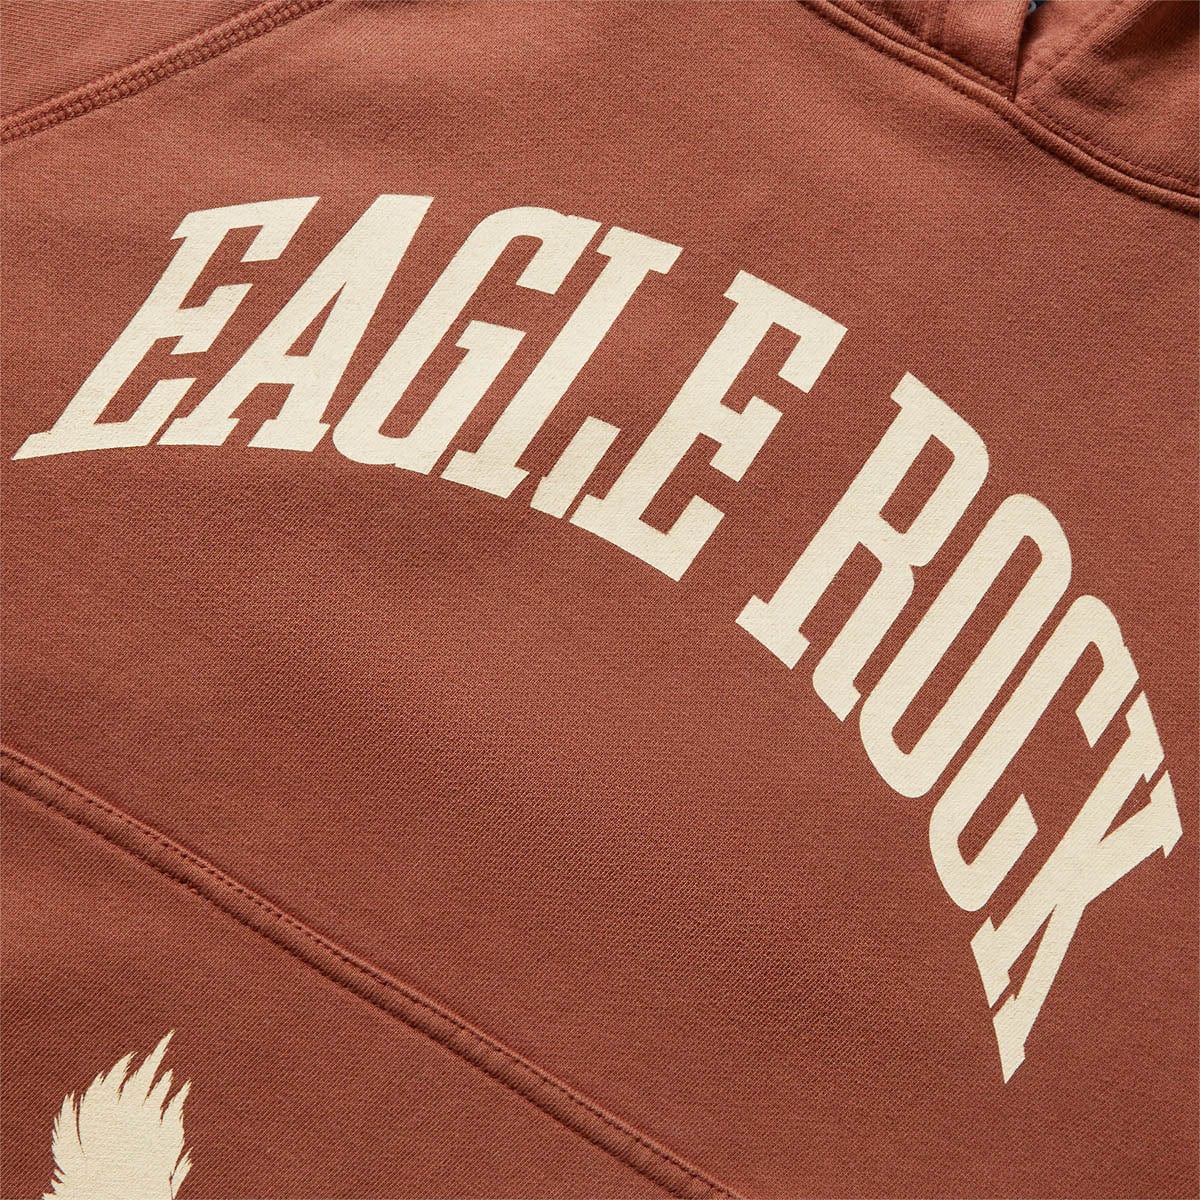 Reese Cooper Hoodies & Sweatshirts EAGLE ROCK HOODED SWEATSHIRT